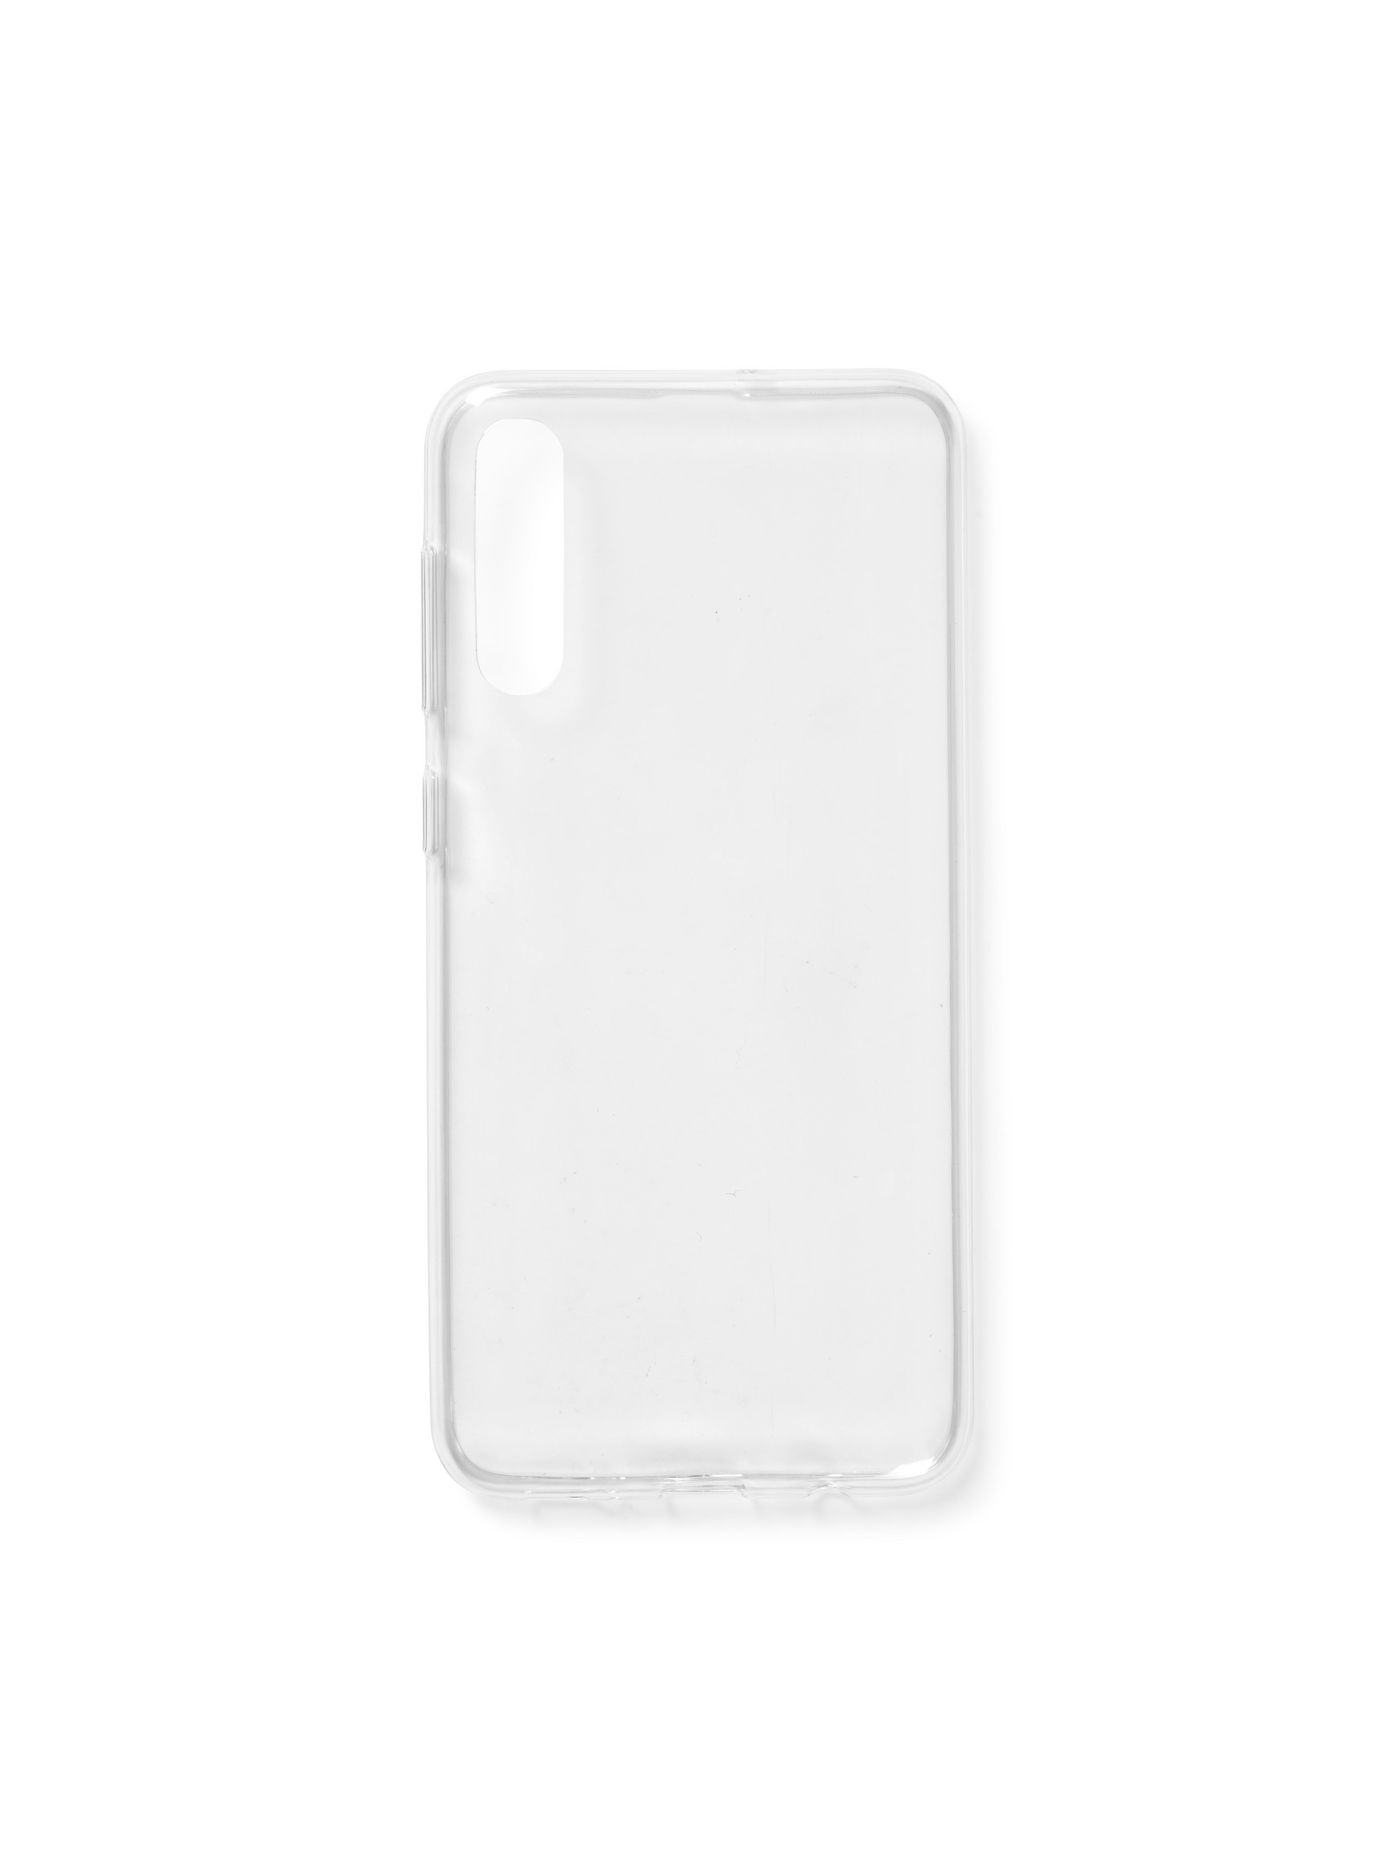 Samsung A50 Soft Case Clear Ultra-slim